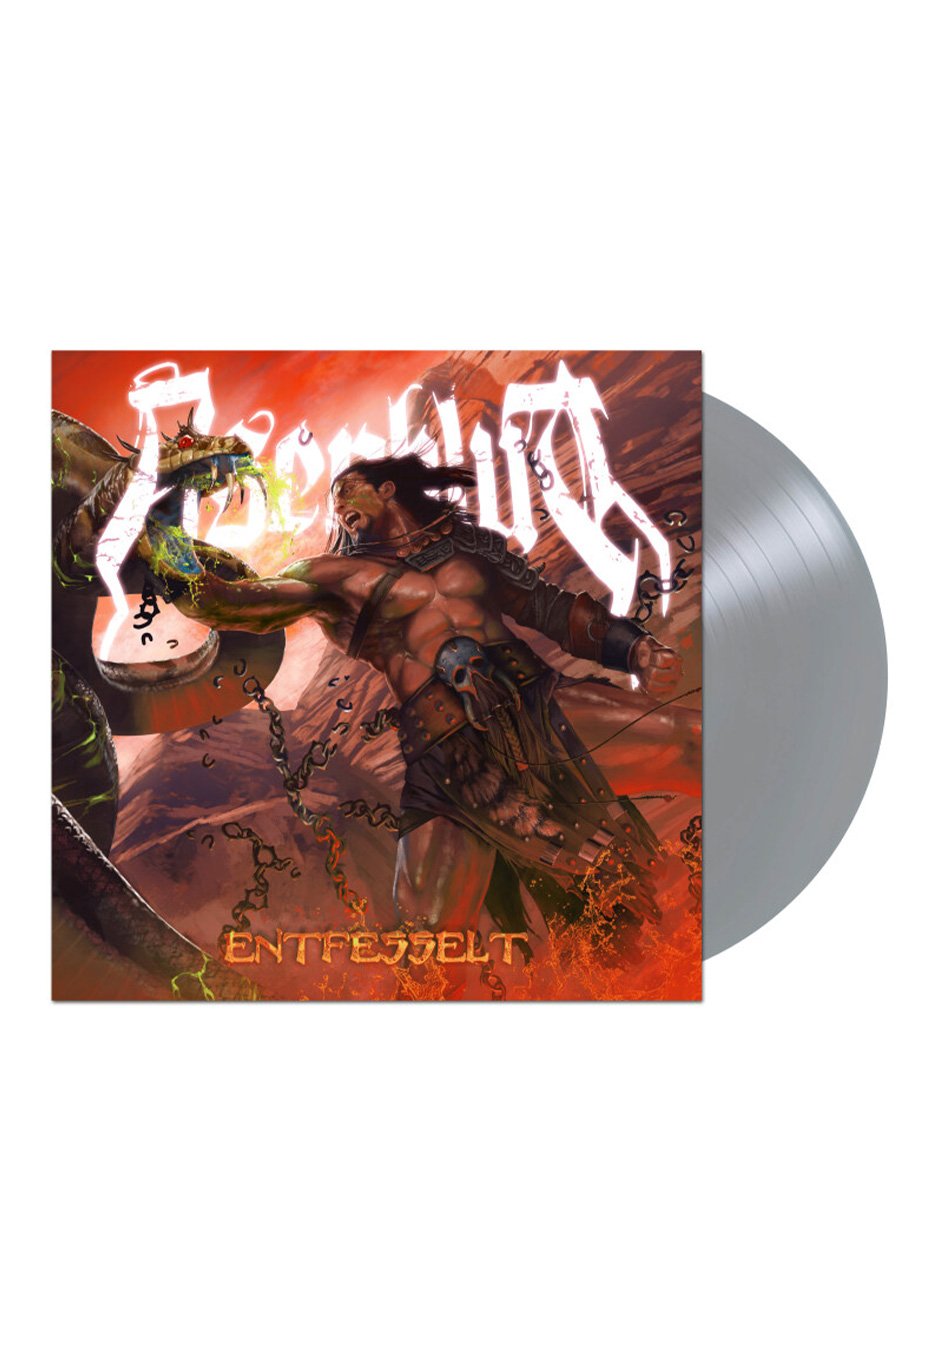 Asenblut - Entfesselt Ltd. Silver - Colored Vinyl